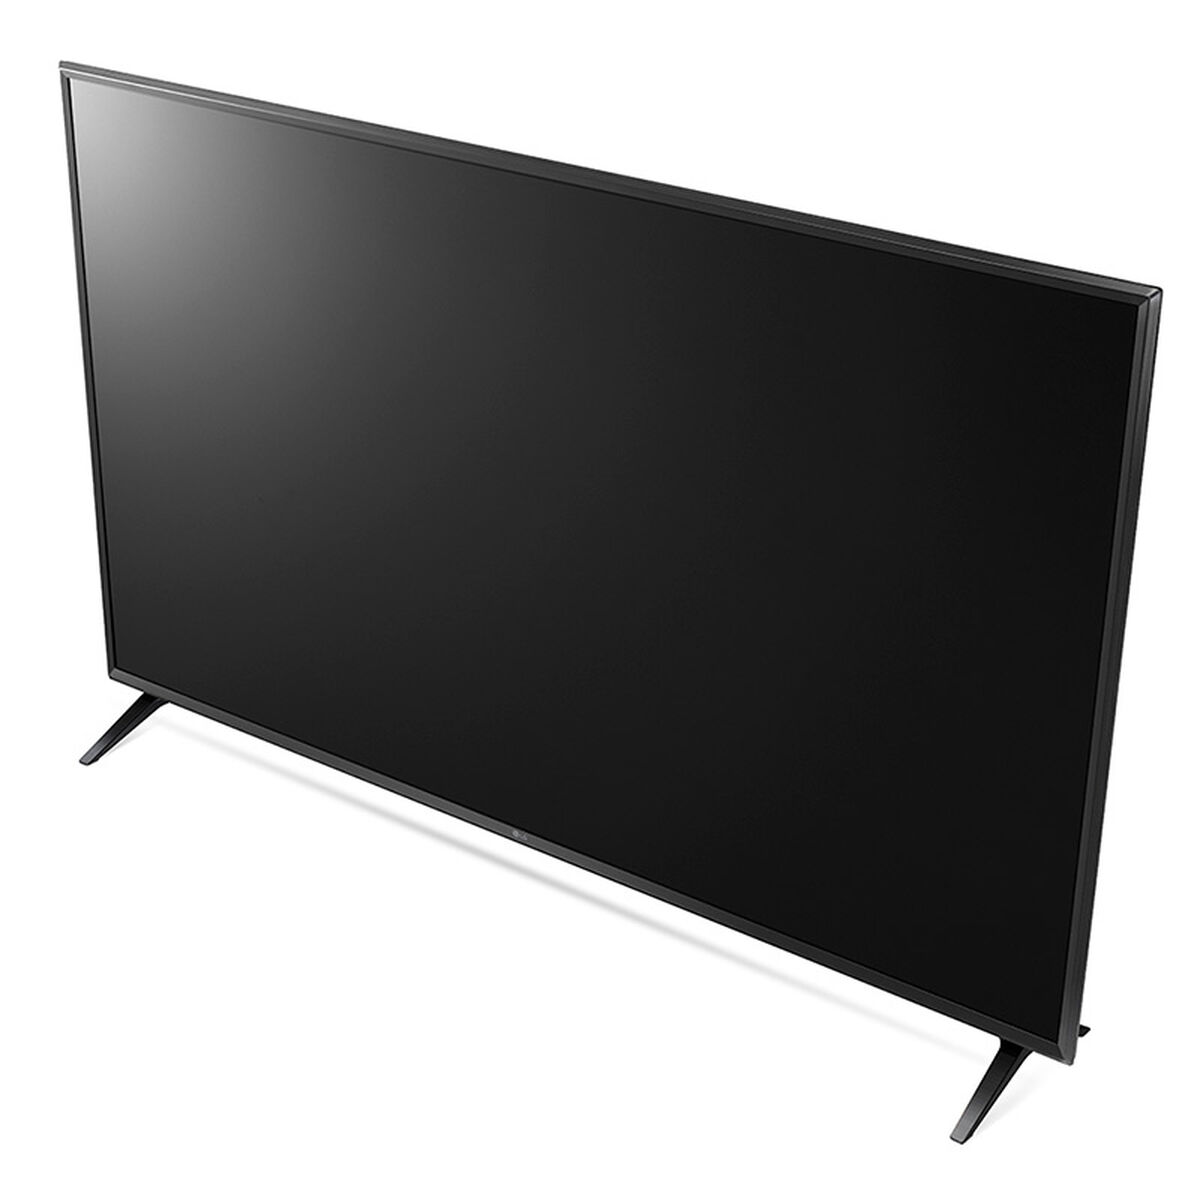 LED 55" LG 55UK6200PS Smart TV 4K Ultra HD